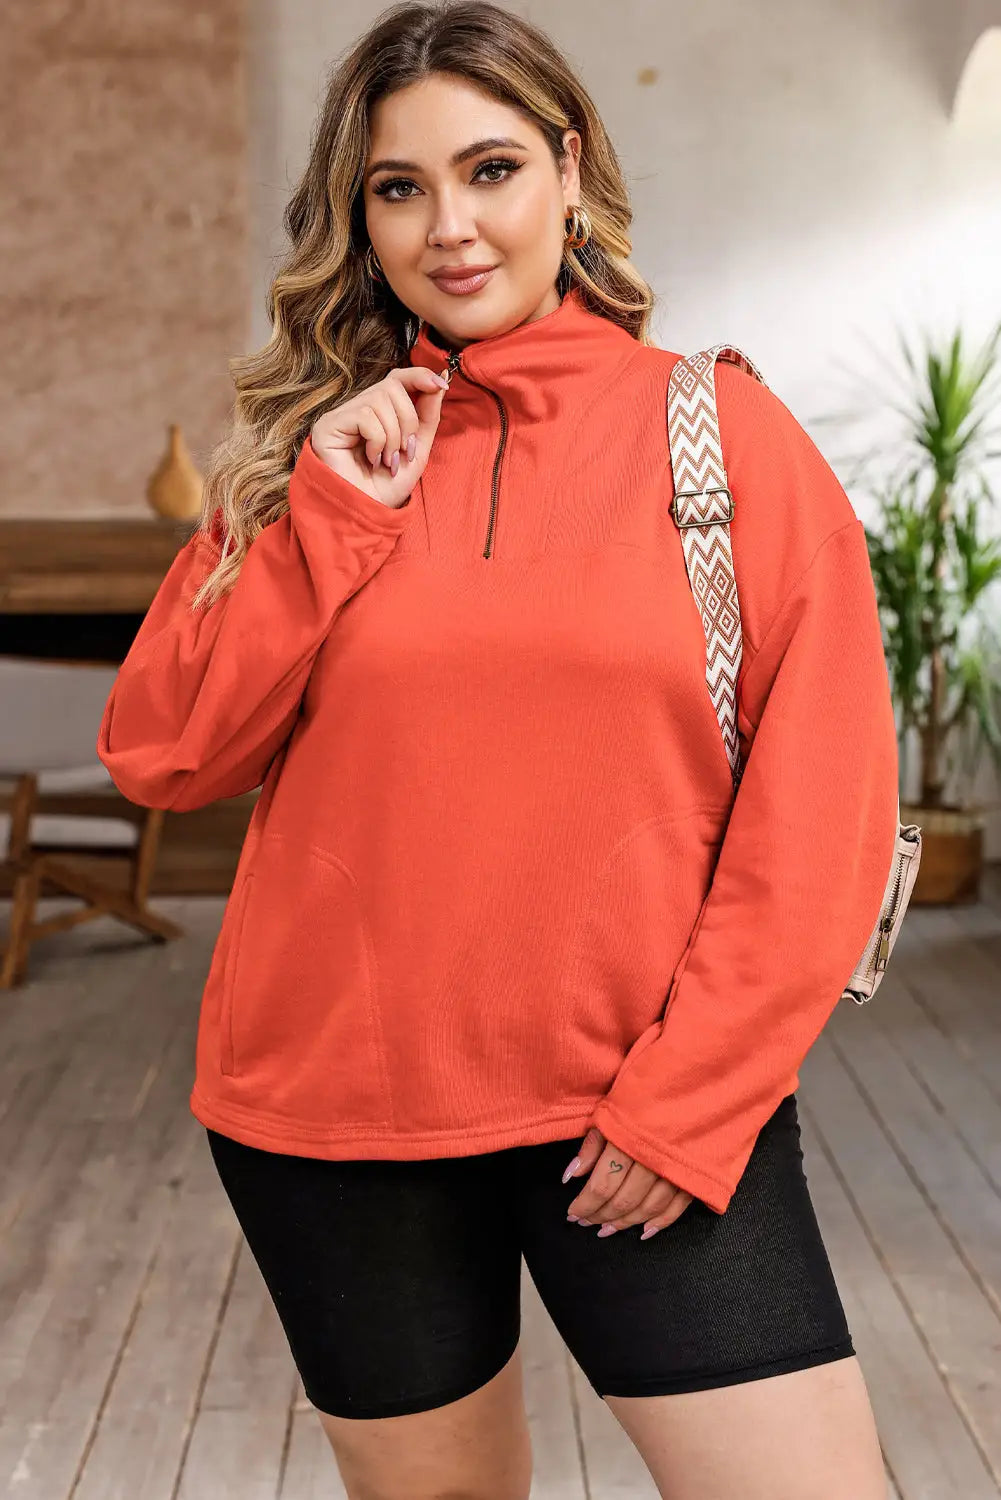 Orange o-ring zipper pocketed plus size sweatshirt - 1x / 80% polyester + 20% cotton